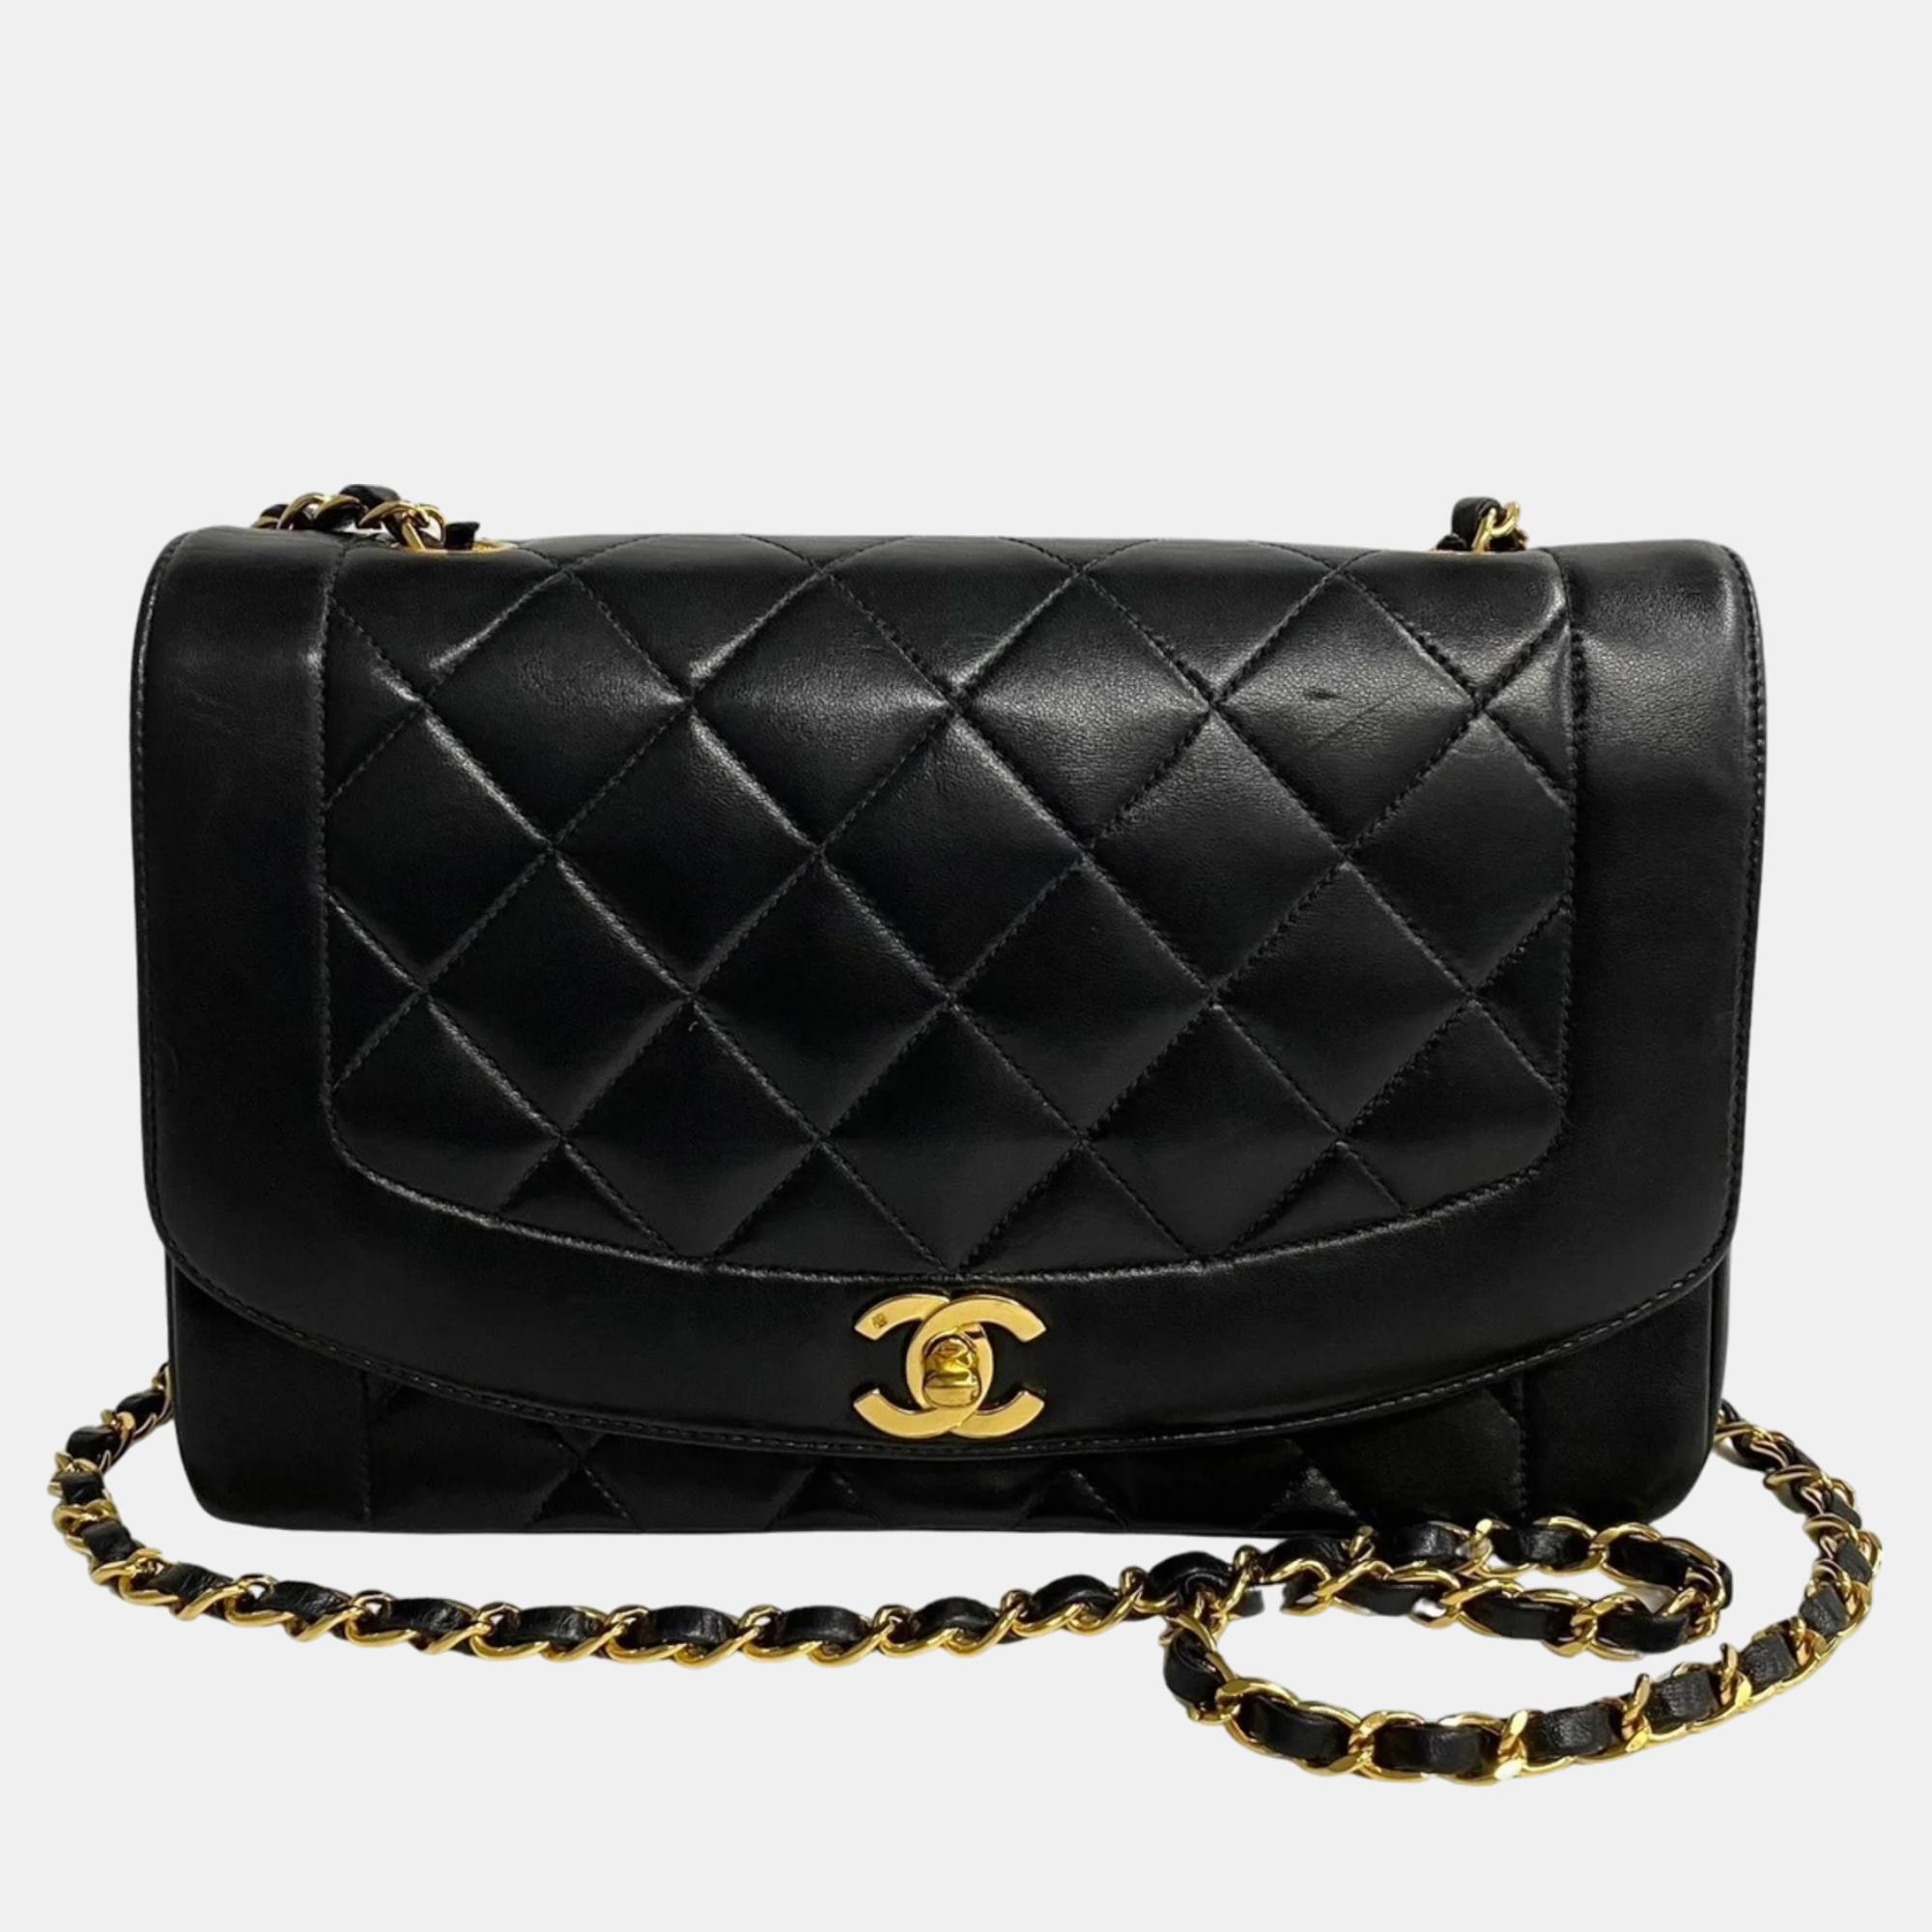 Chanel black lambskin leather medium diana flap shoulder bag